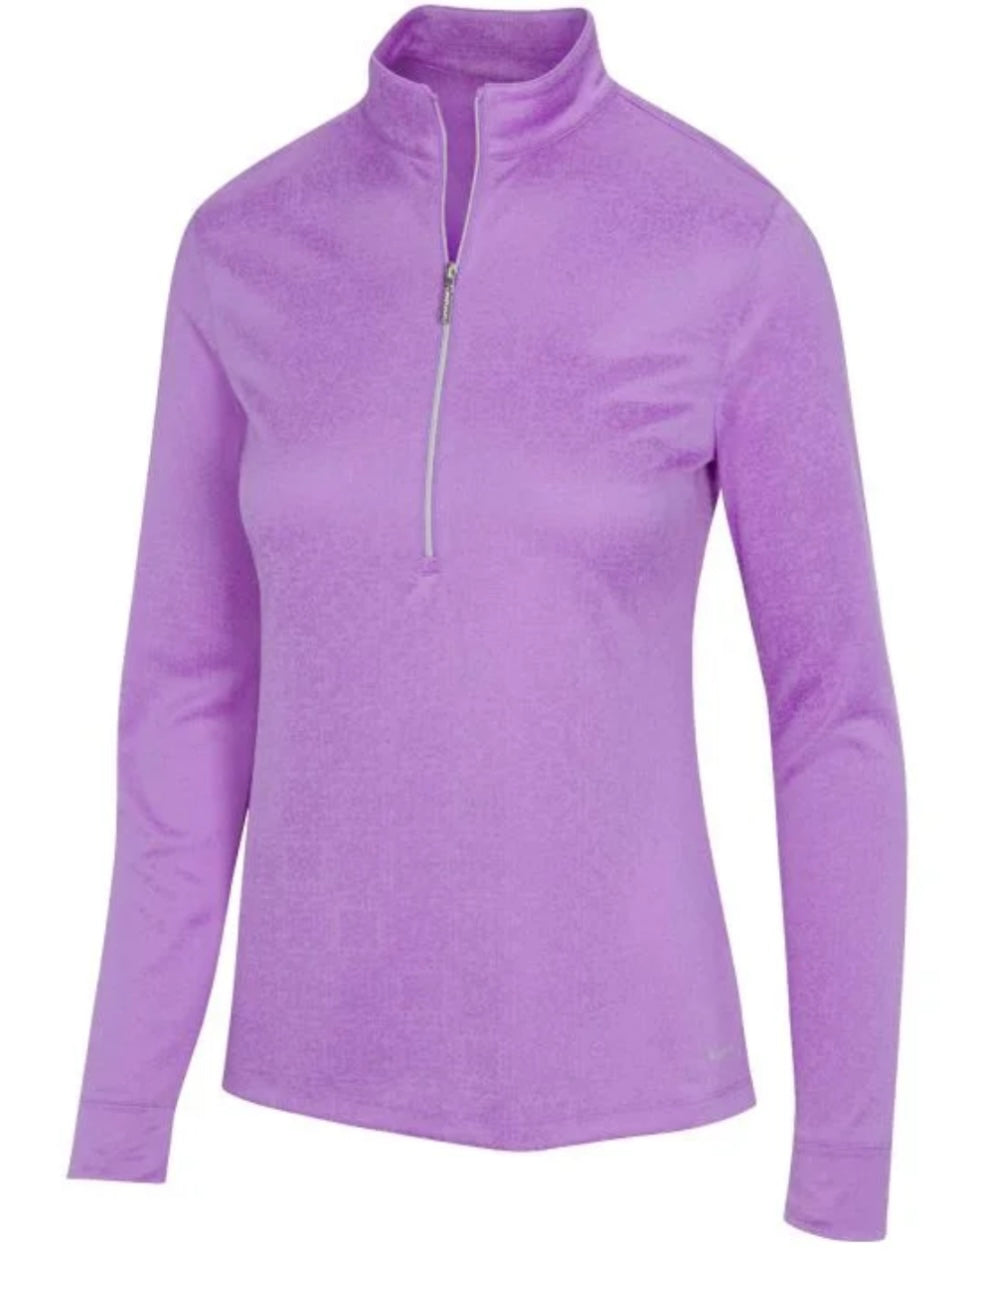 Greg Norman Womens Solar XP Mercado 1/2 Zip Long Sleeve Golf Top Size: Medium Iris